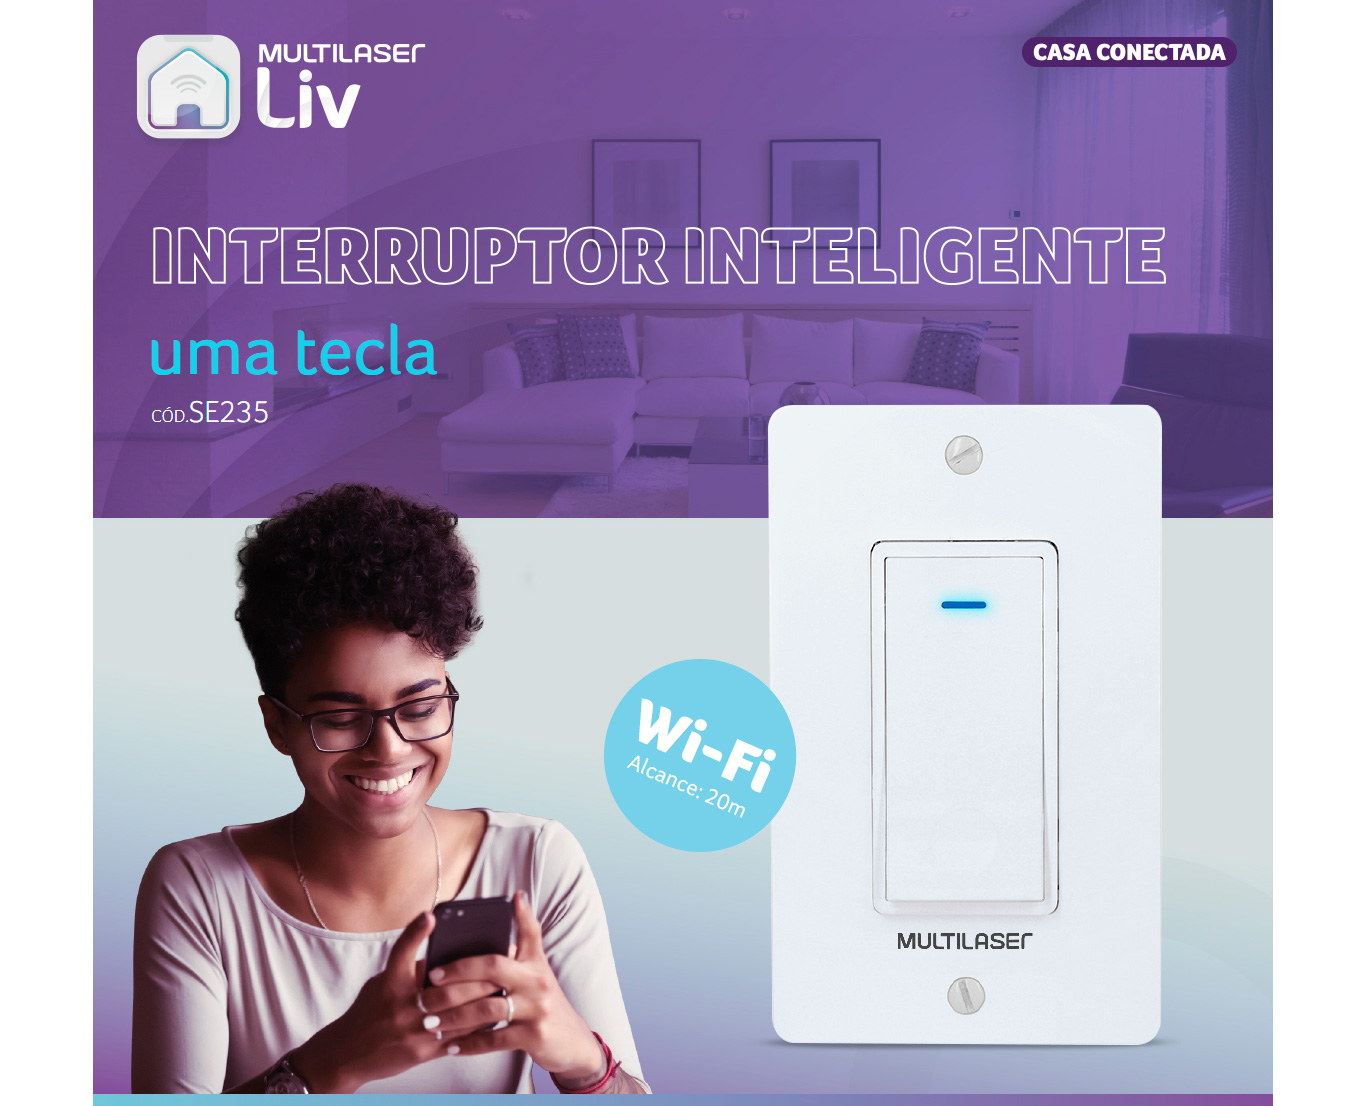  Interruptor Inteligente 1 Tecla Wi-Fi - Multilaser Liv - SE235 